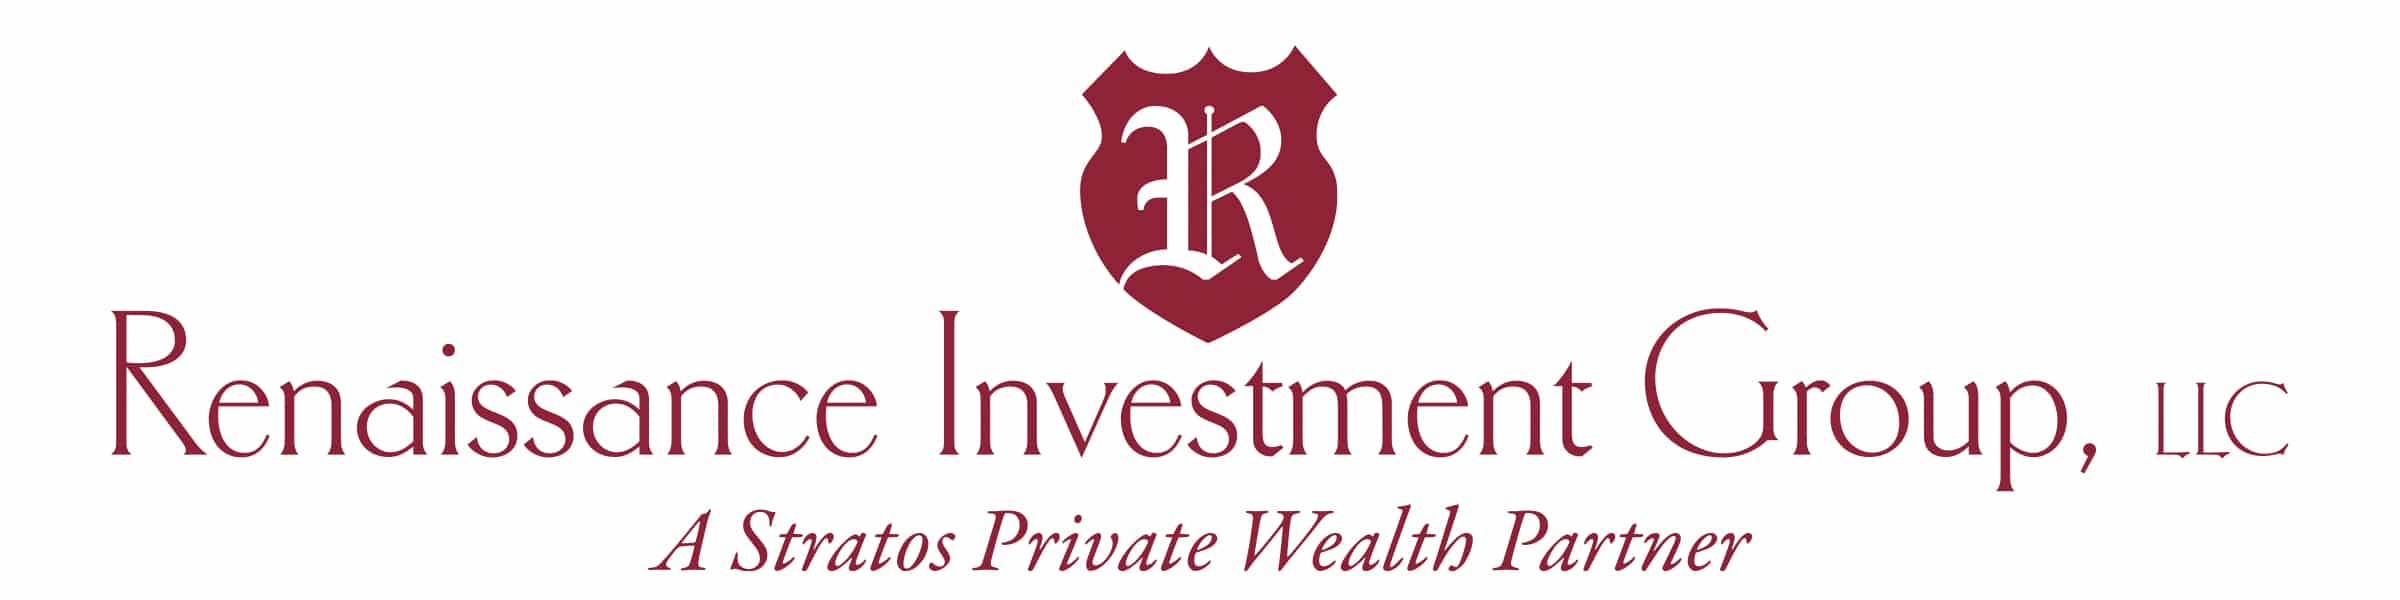 Renaissance Investment Group, LLC